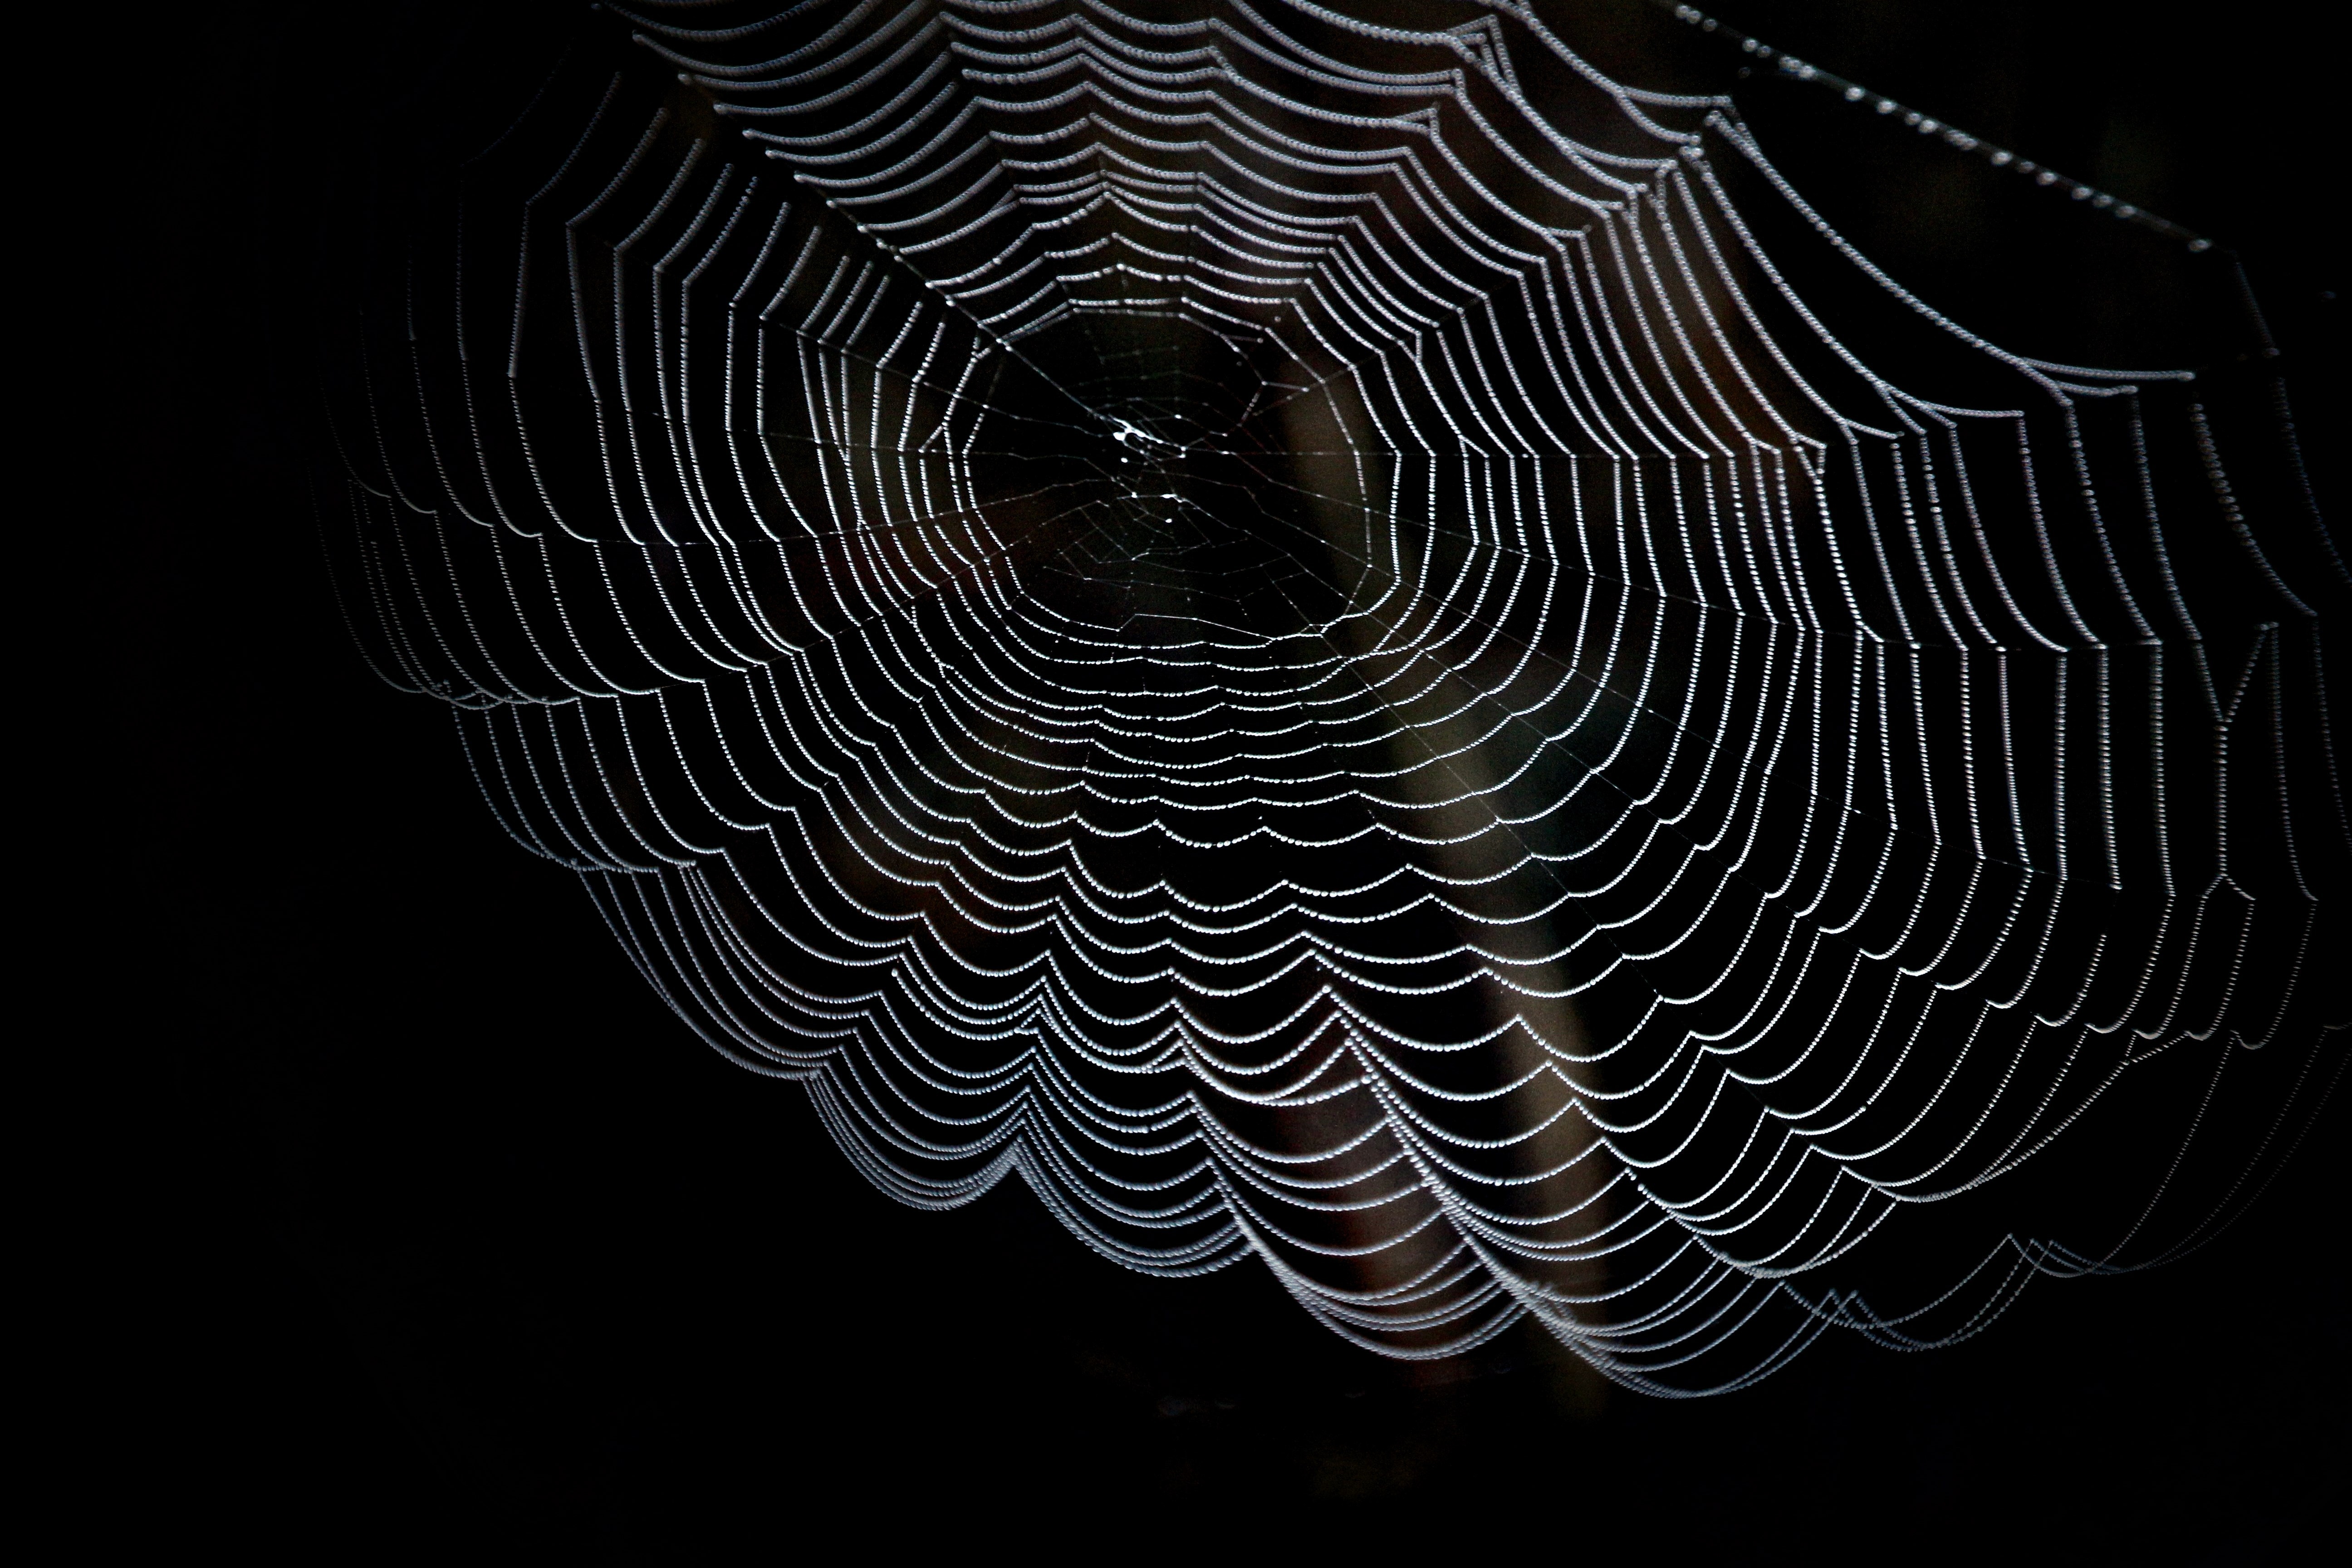 250+ Engaging Spider Web Photos · Pexels · Free Stock Photos